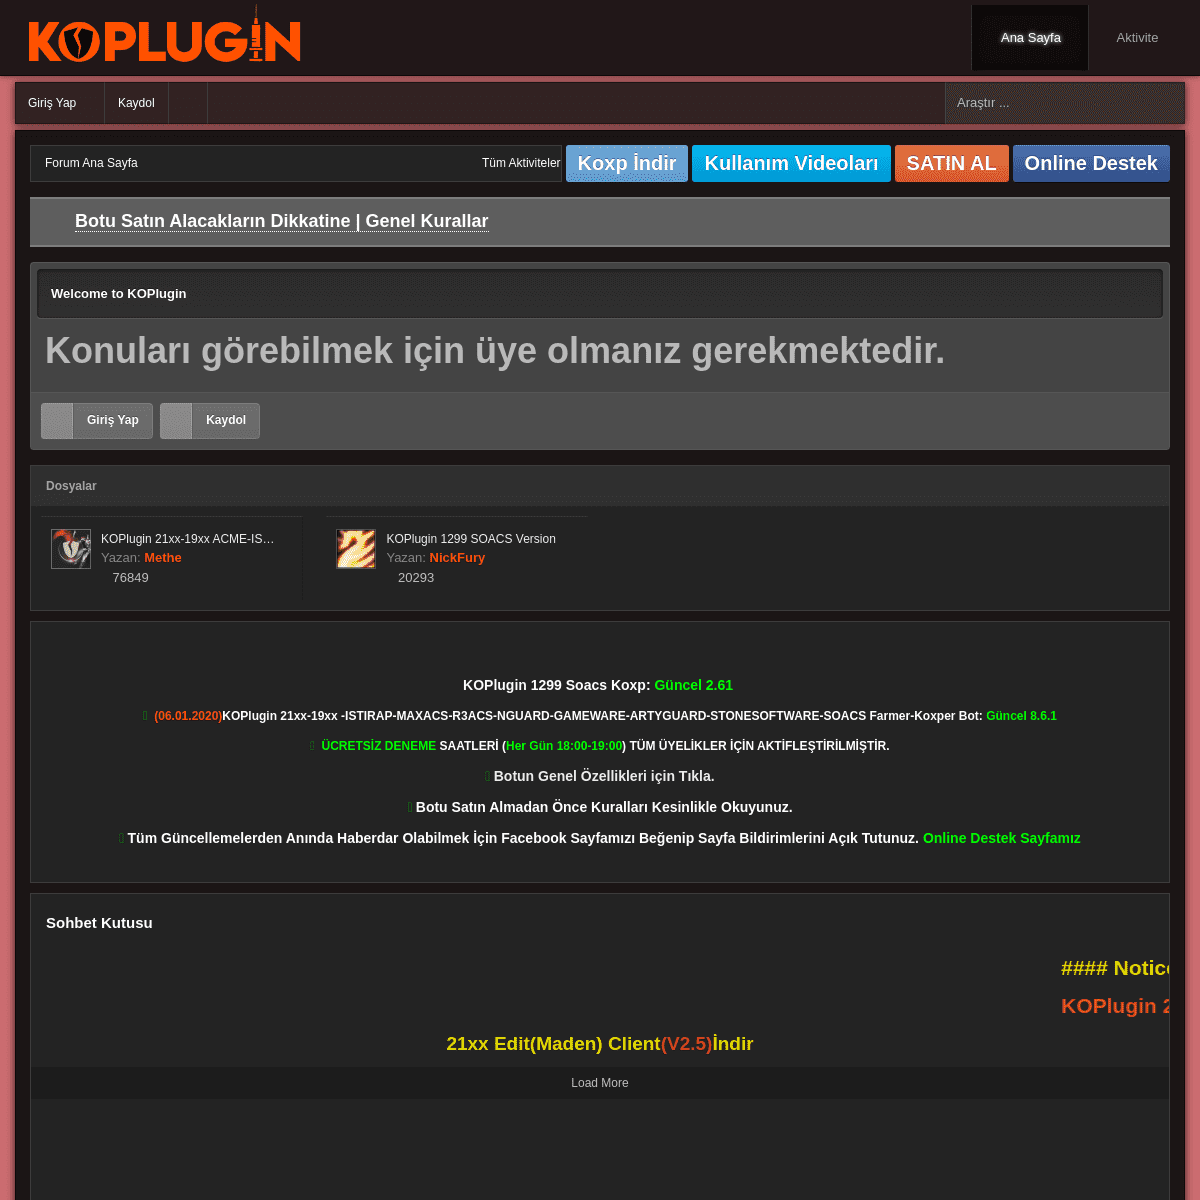 A complete backup of koplugin.com